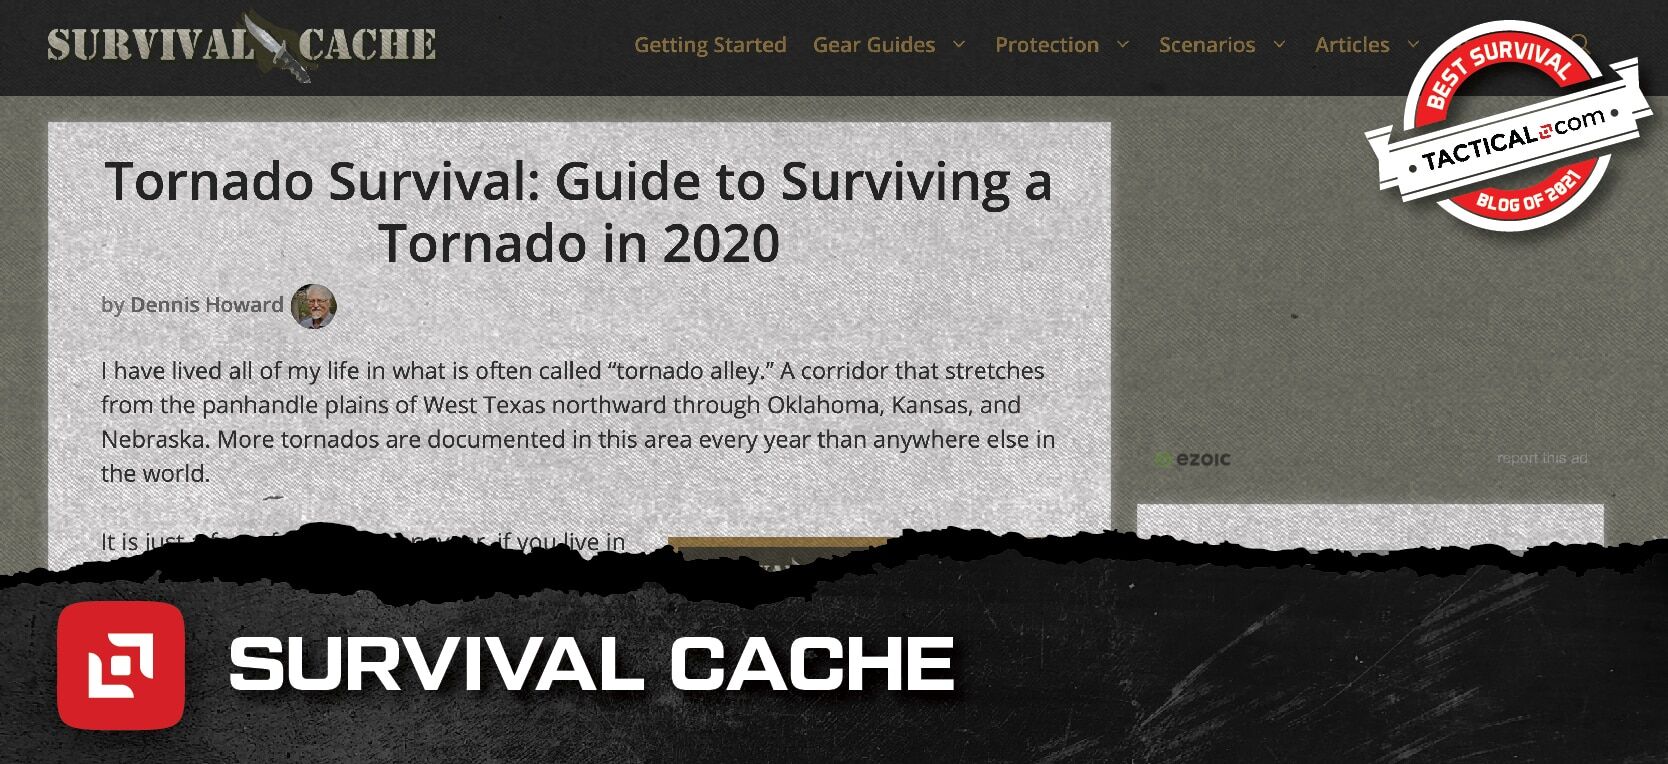 Survival Cache homepage